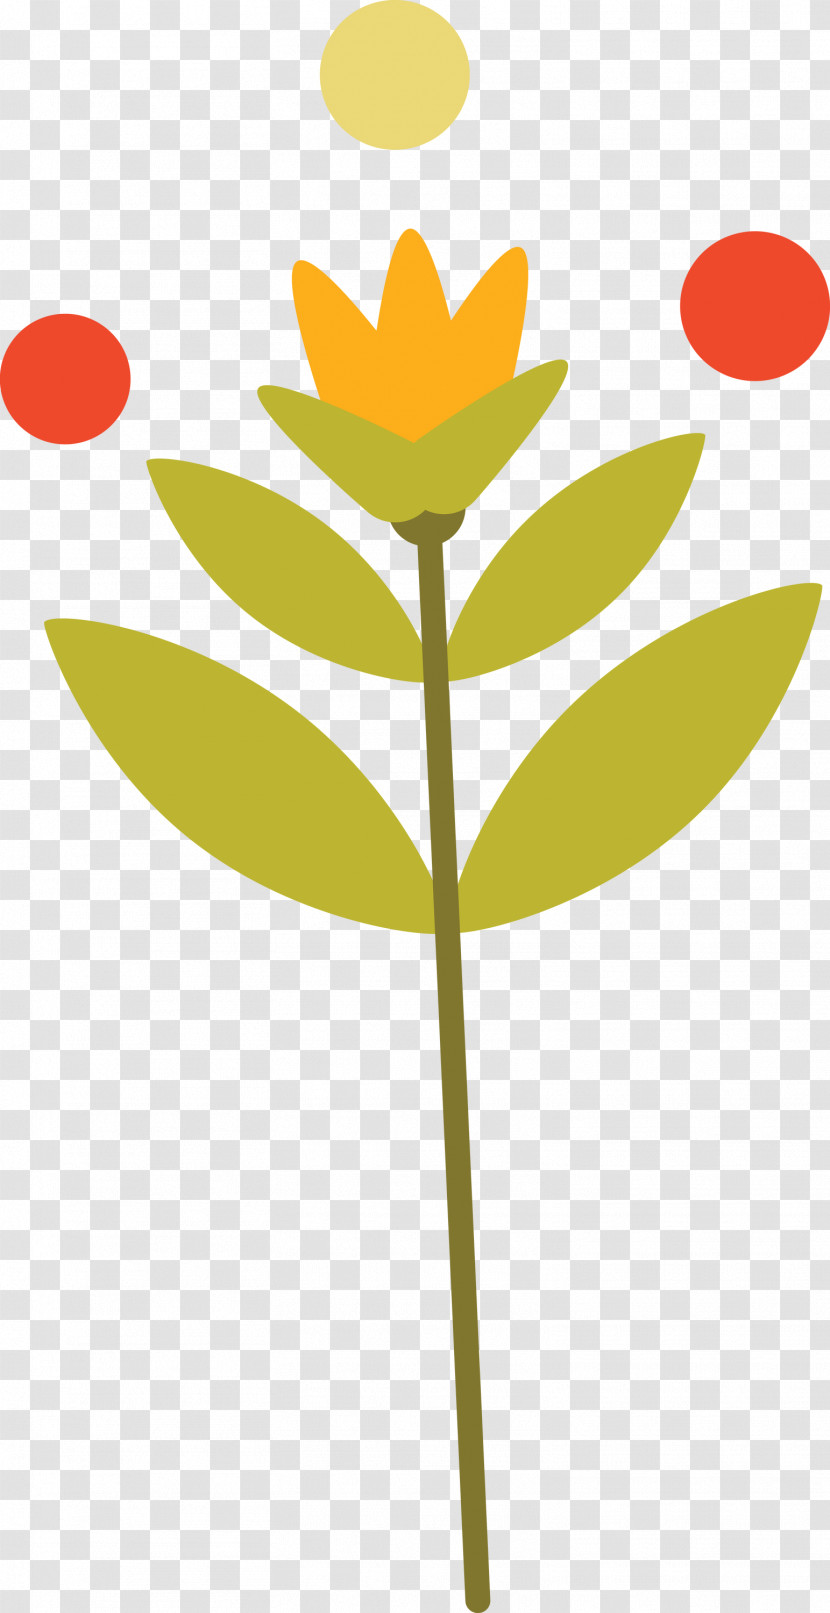 Plant Stem Petal Leaf Yellow M-tree Transparent PNG